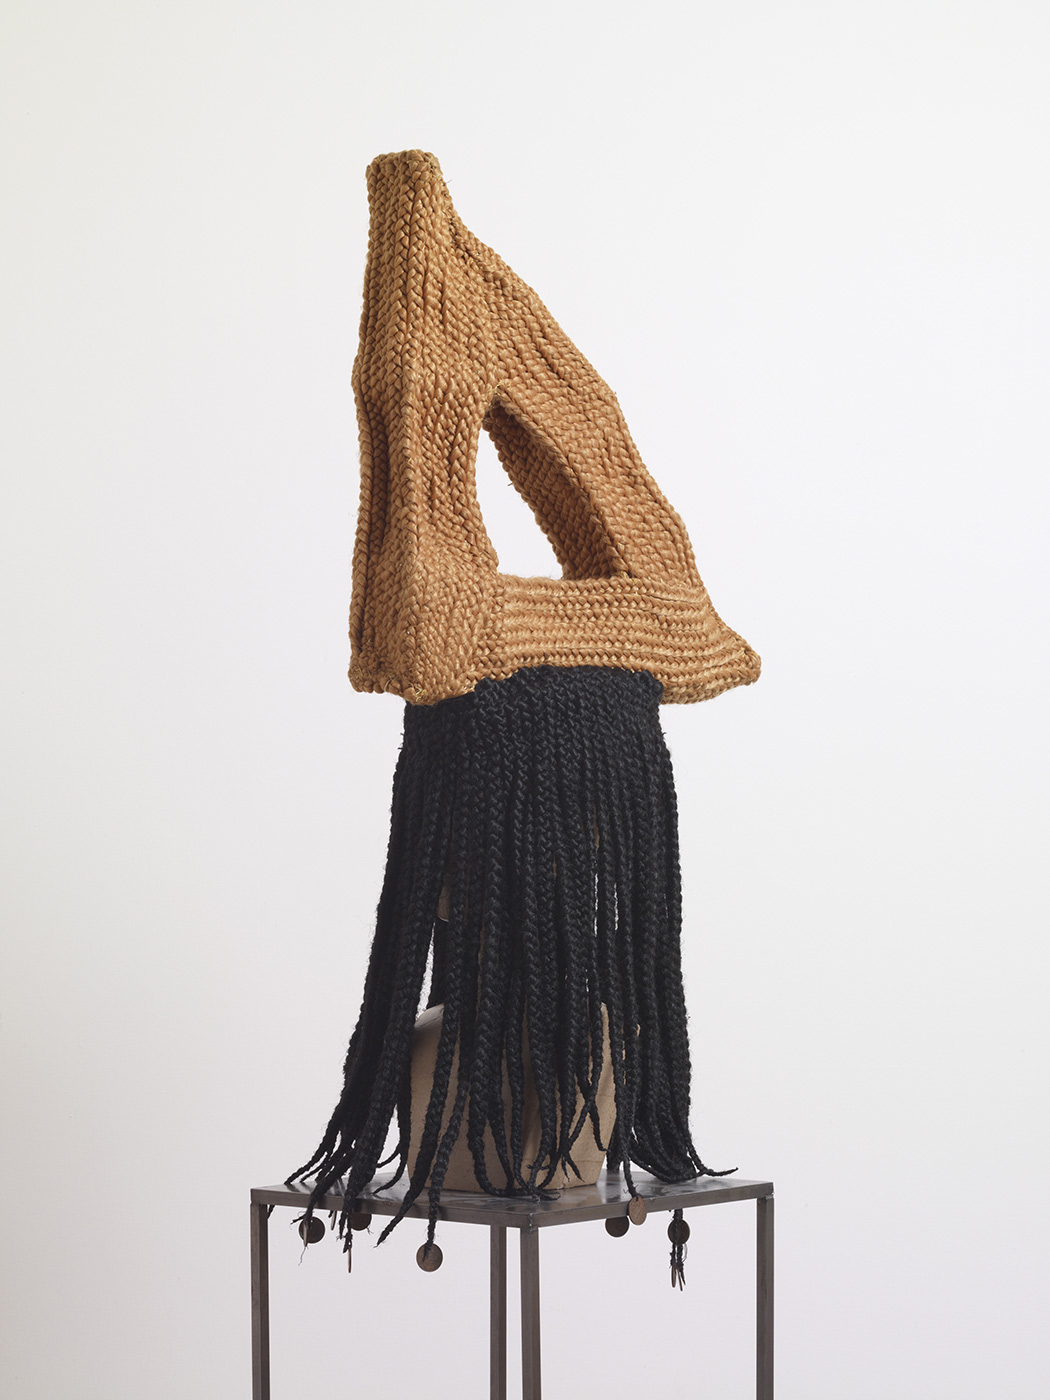 Meschac Gaba - Pythagore (perruque MAVA-musée d'art de la vie active), 2010-2011